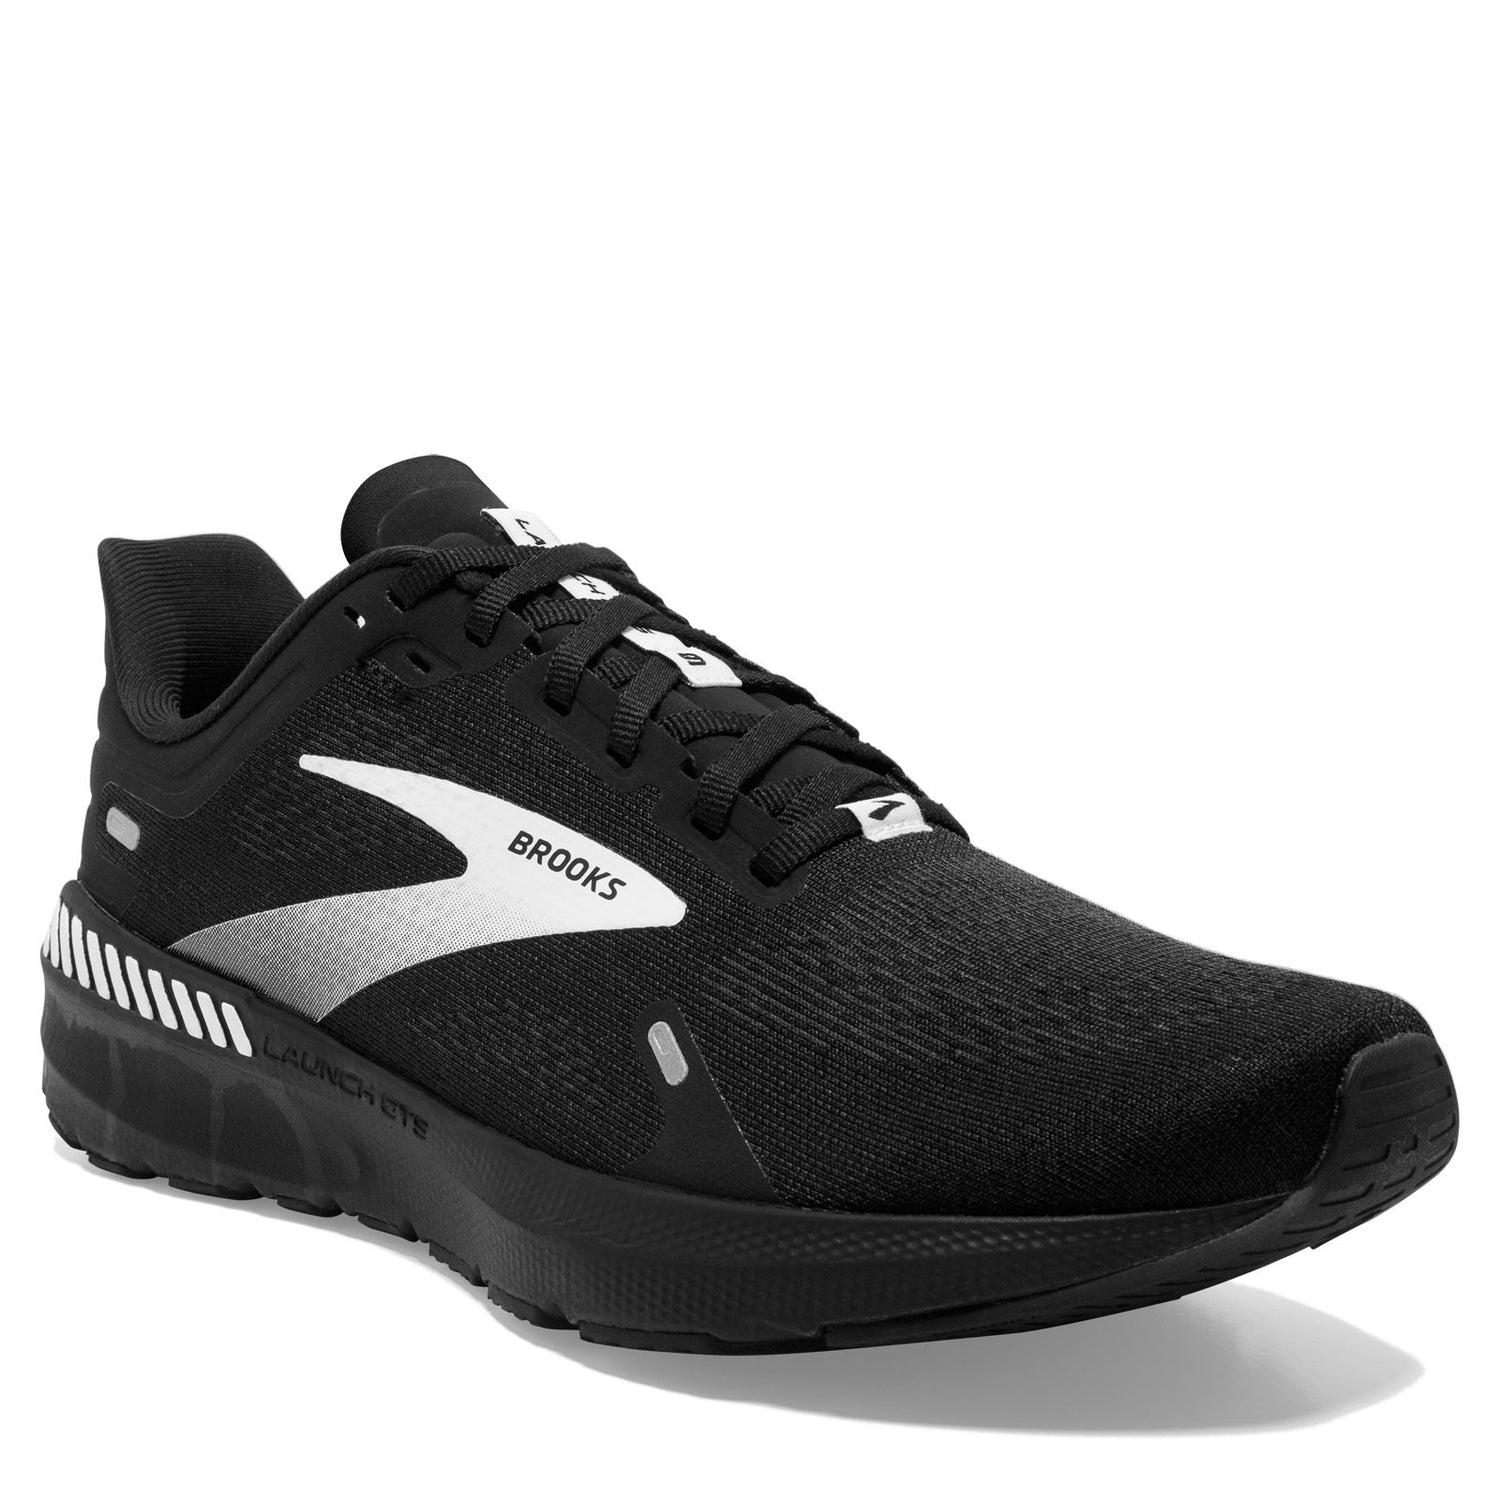 Peltz Shoes  Men's Brooks Launch GTS 9 Running Shoe Black 110387 1D 048